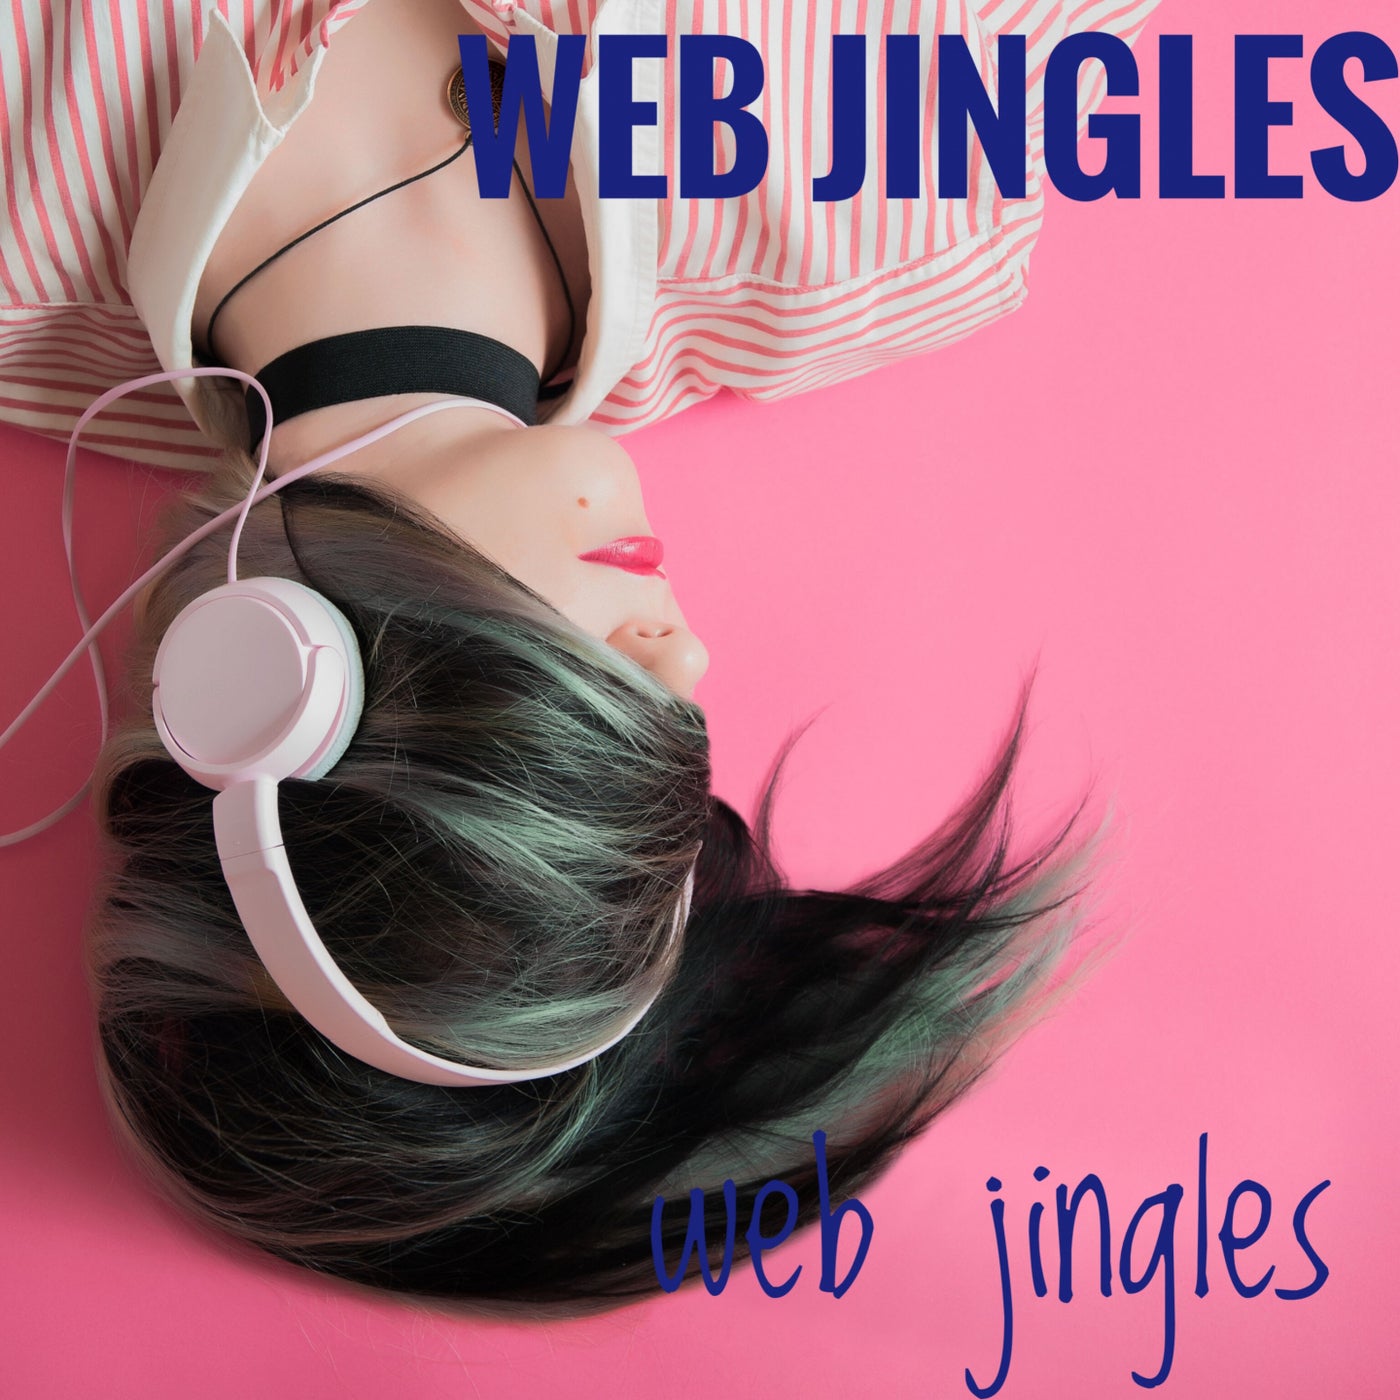 Web Jingles (Jingles for Top Girl)